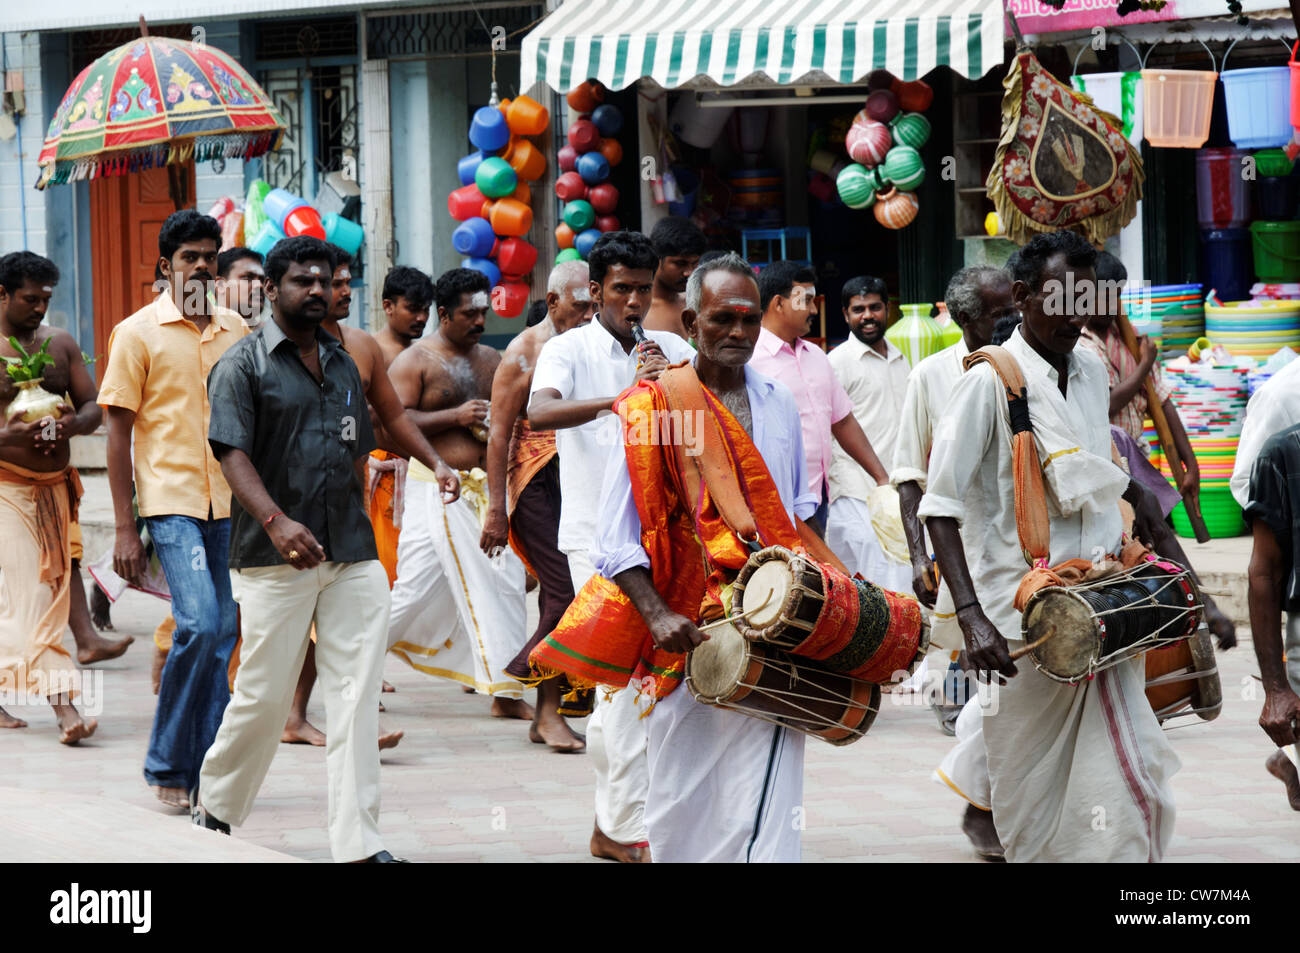 A religious parade in India Stock Photo